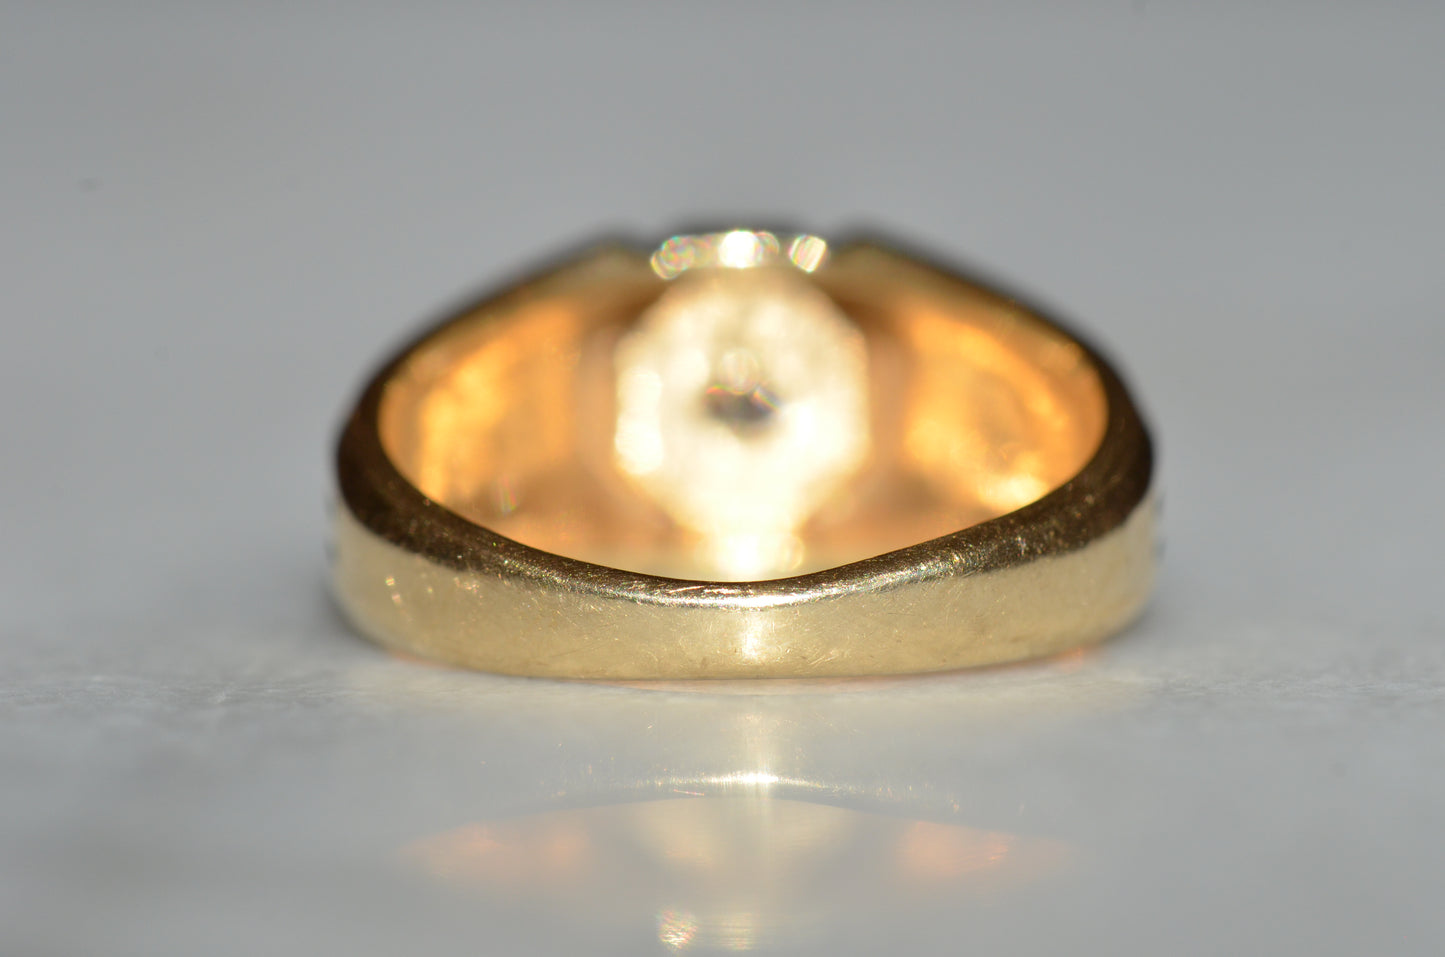 Striking Vintage Geometric Diamond Ring